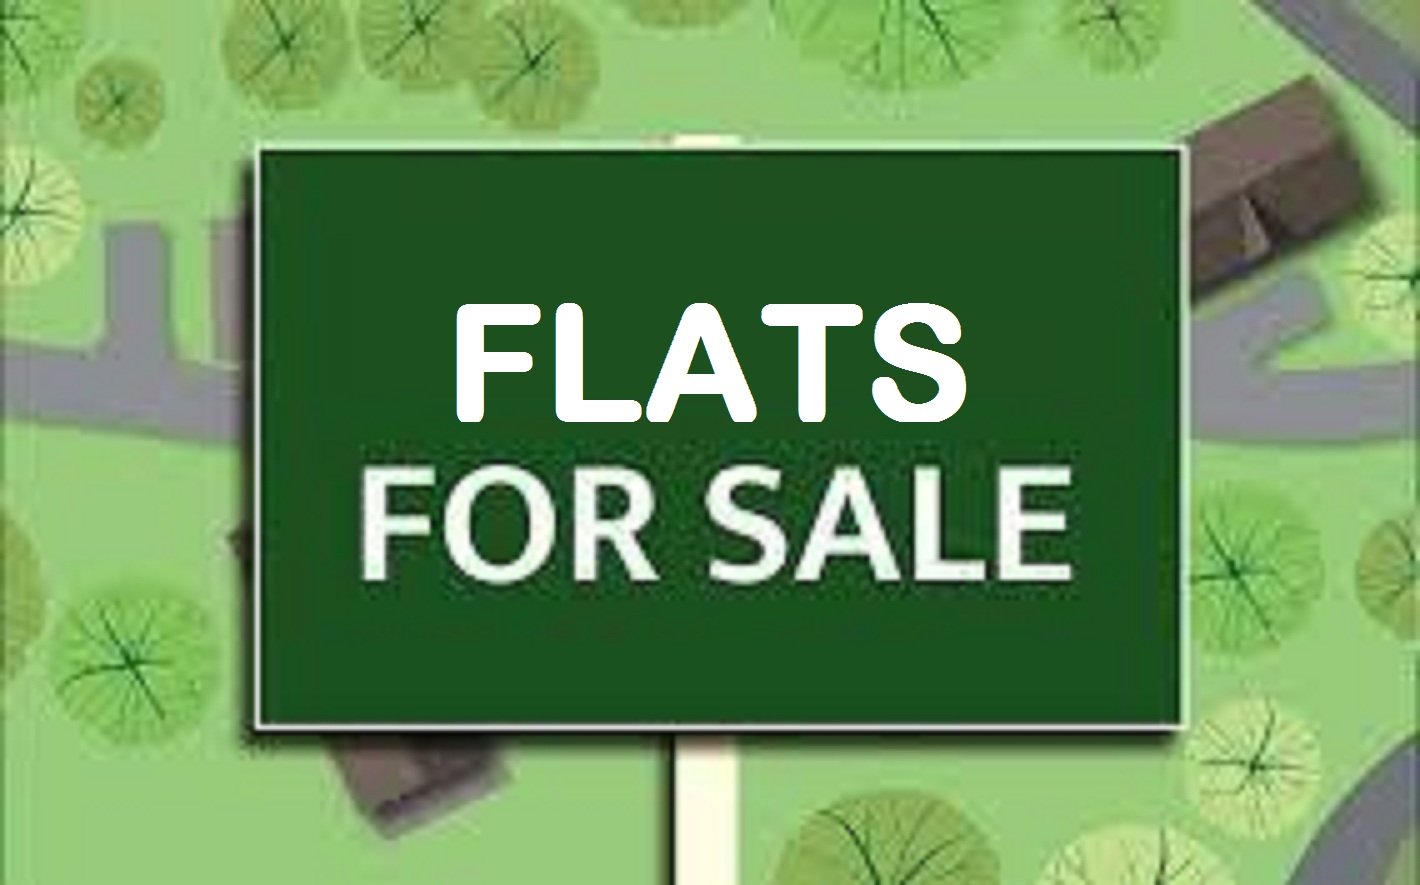 4 Flats For Sale at Thurpu Bazar, Gorantla.